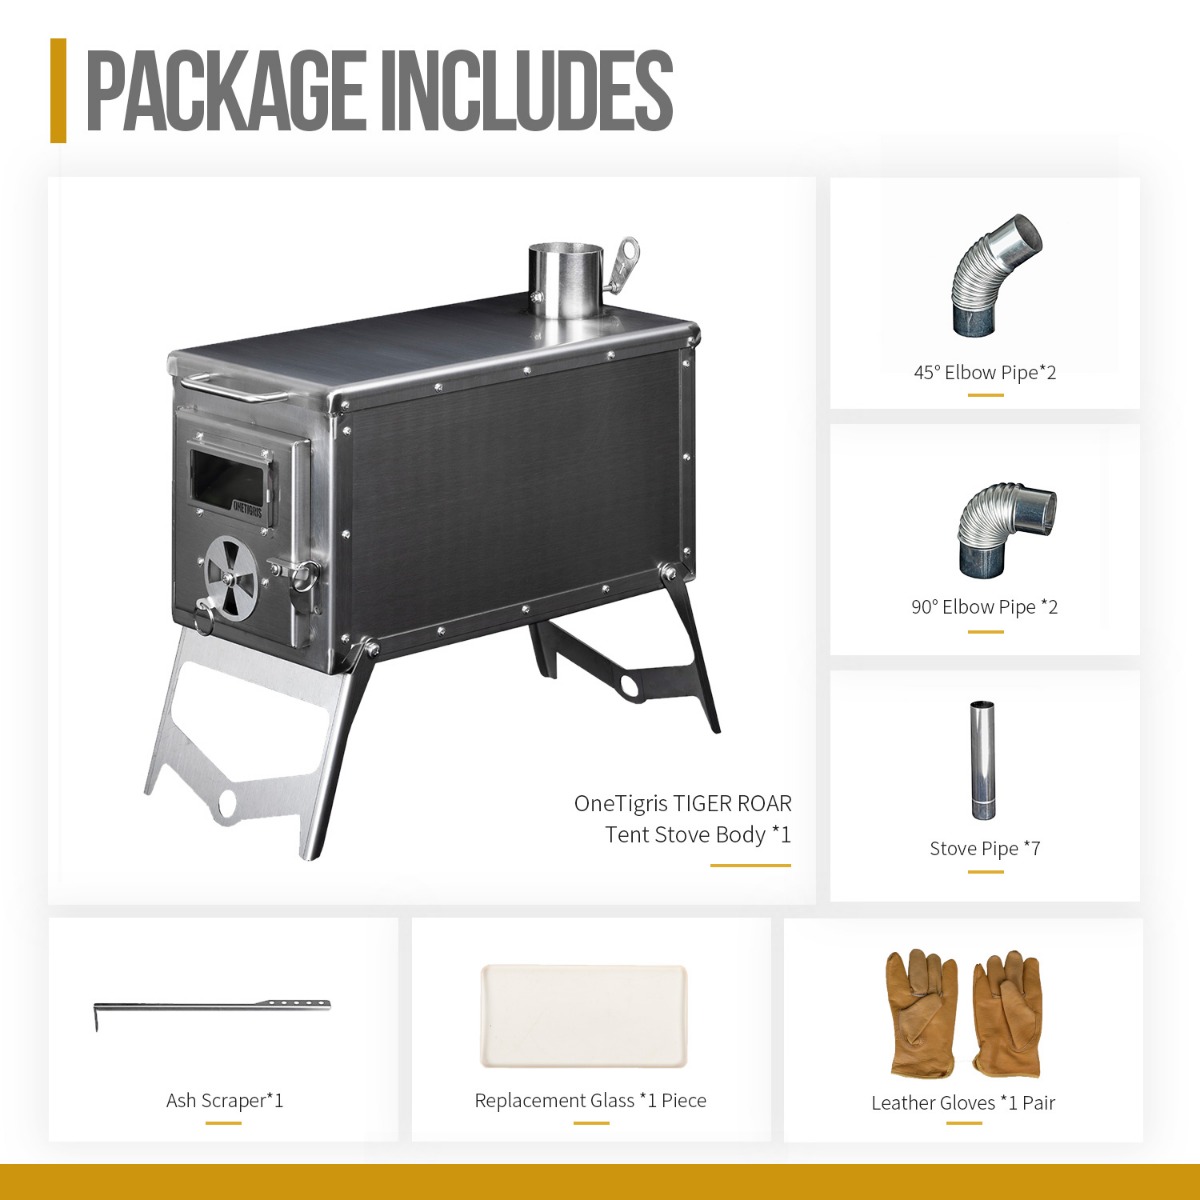 Product details of OneTigris TIGER ROAR tent stove